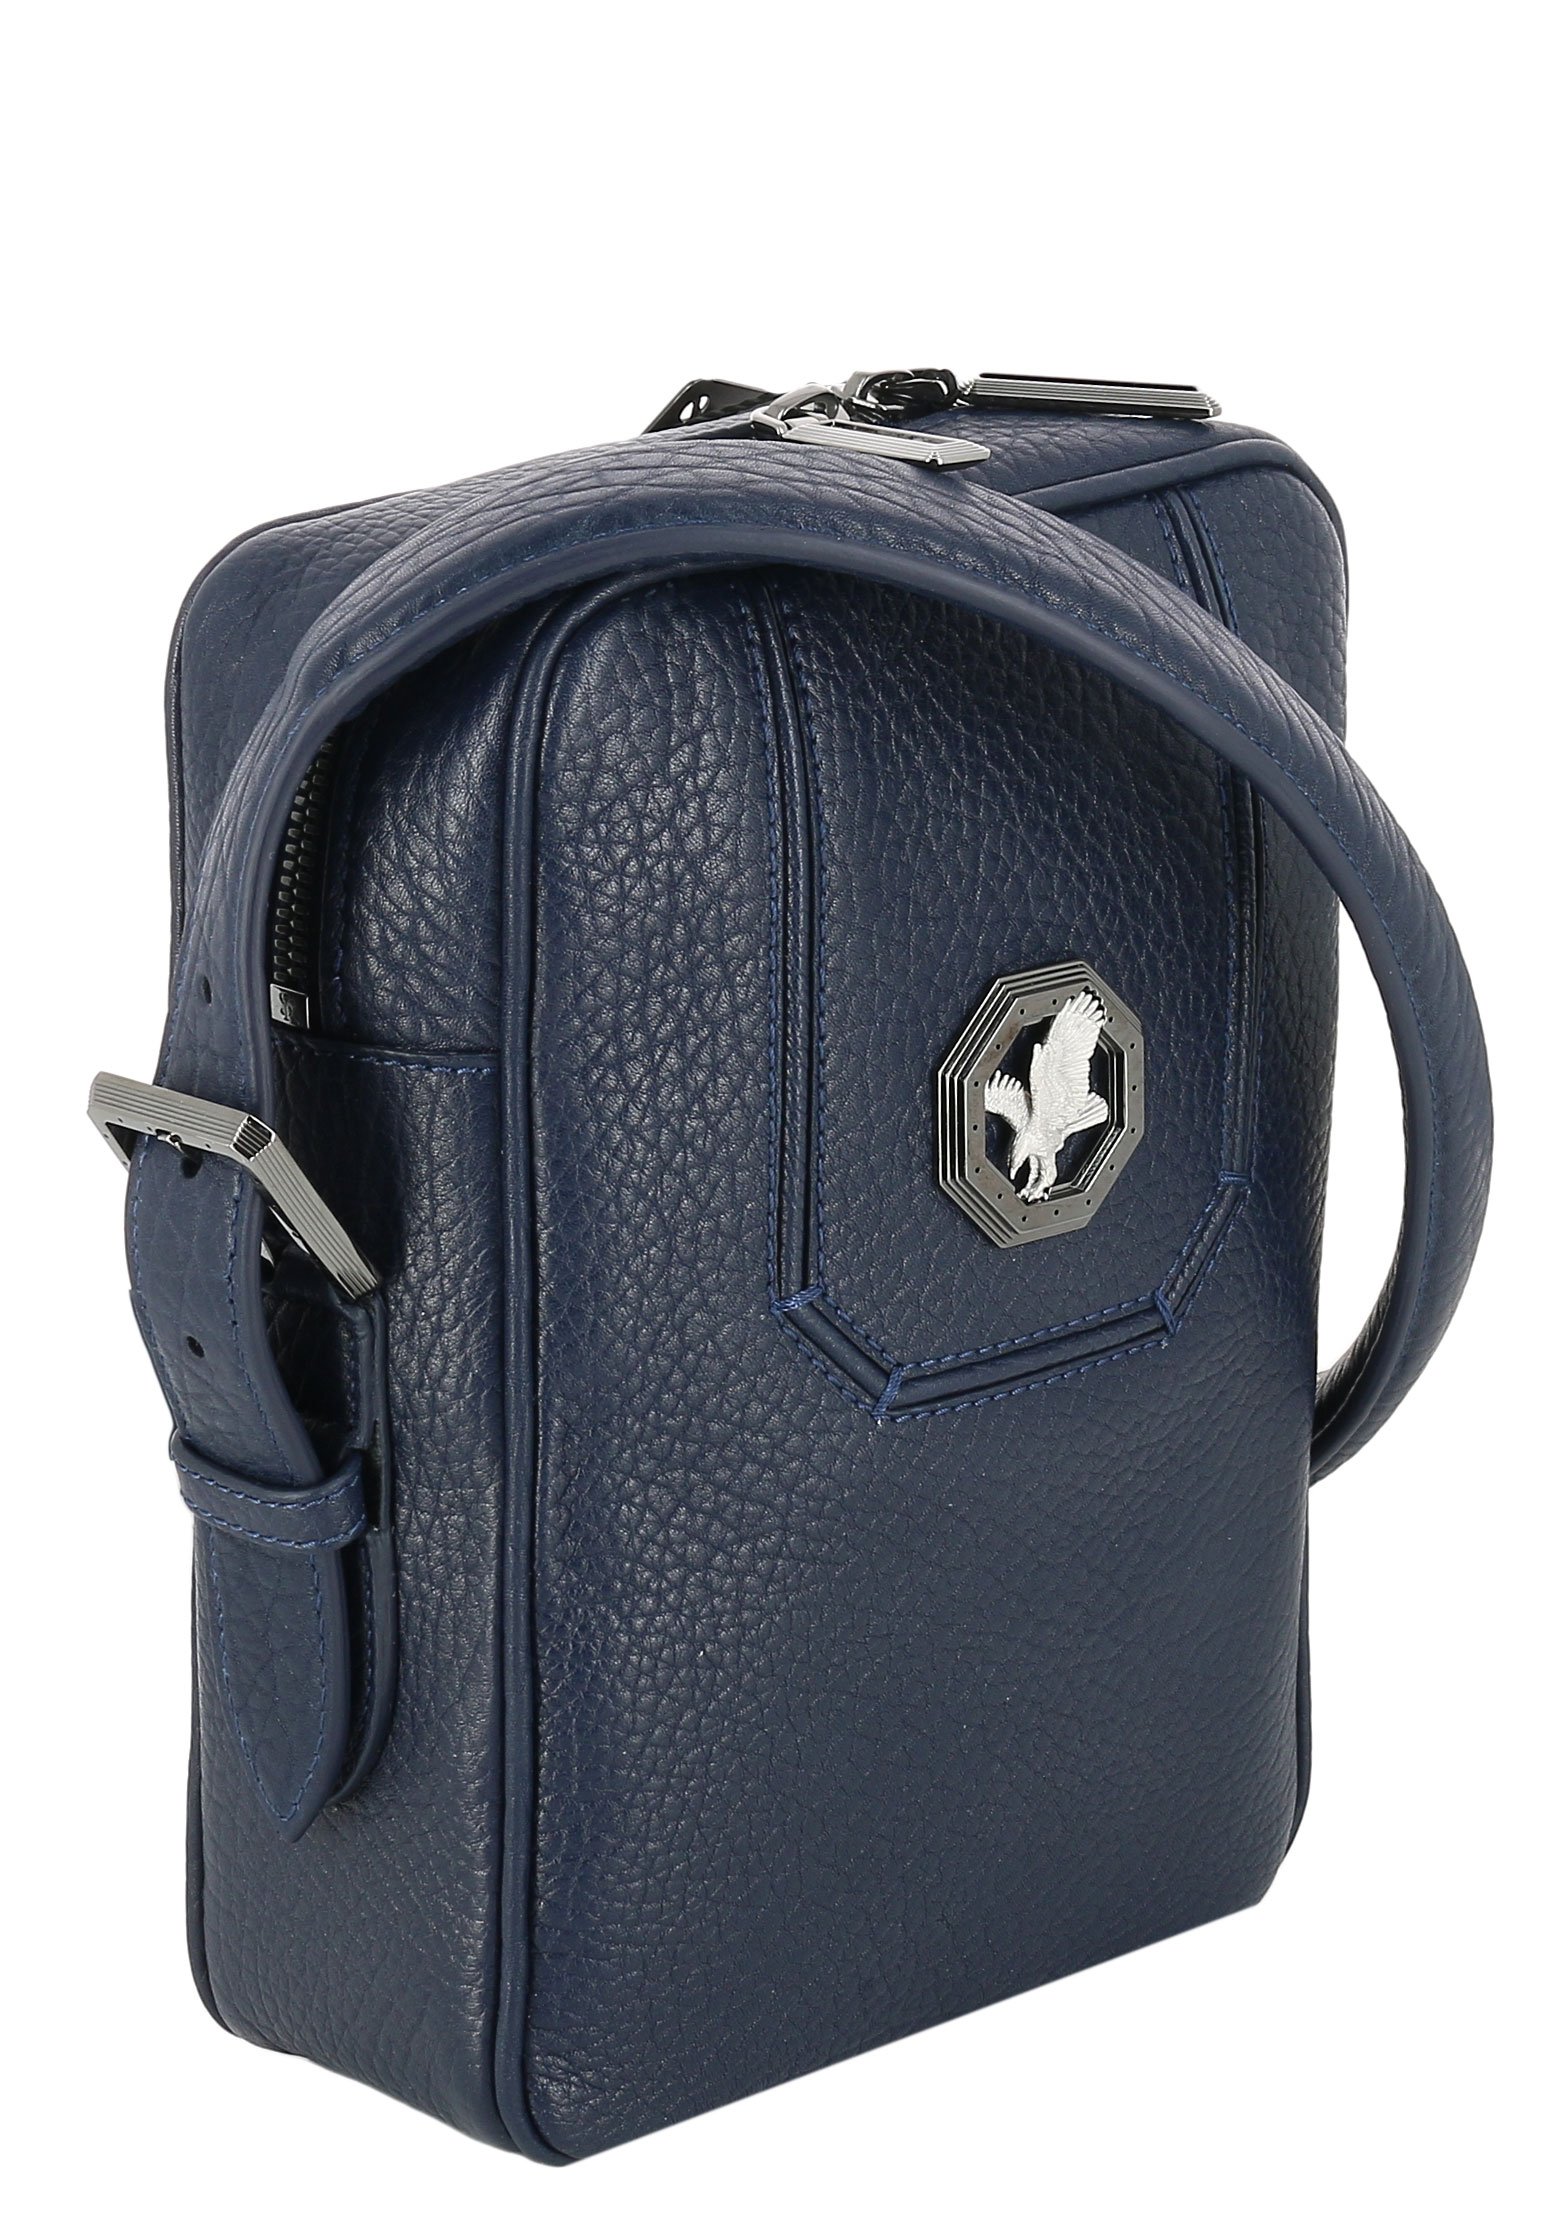 Messenger bag STEFANO RICCI Color: blue (Code: 290) in online store Allure